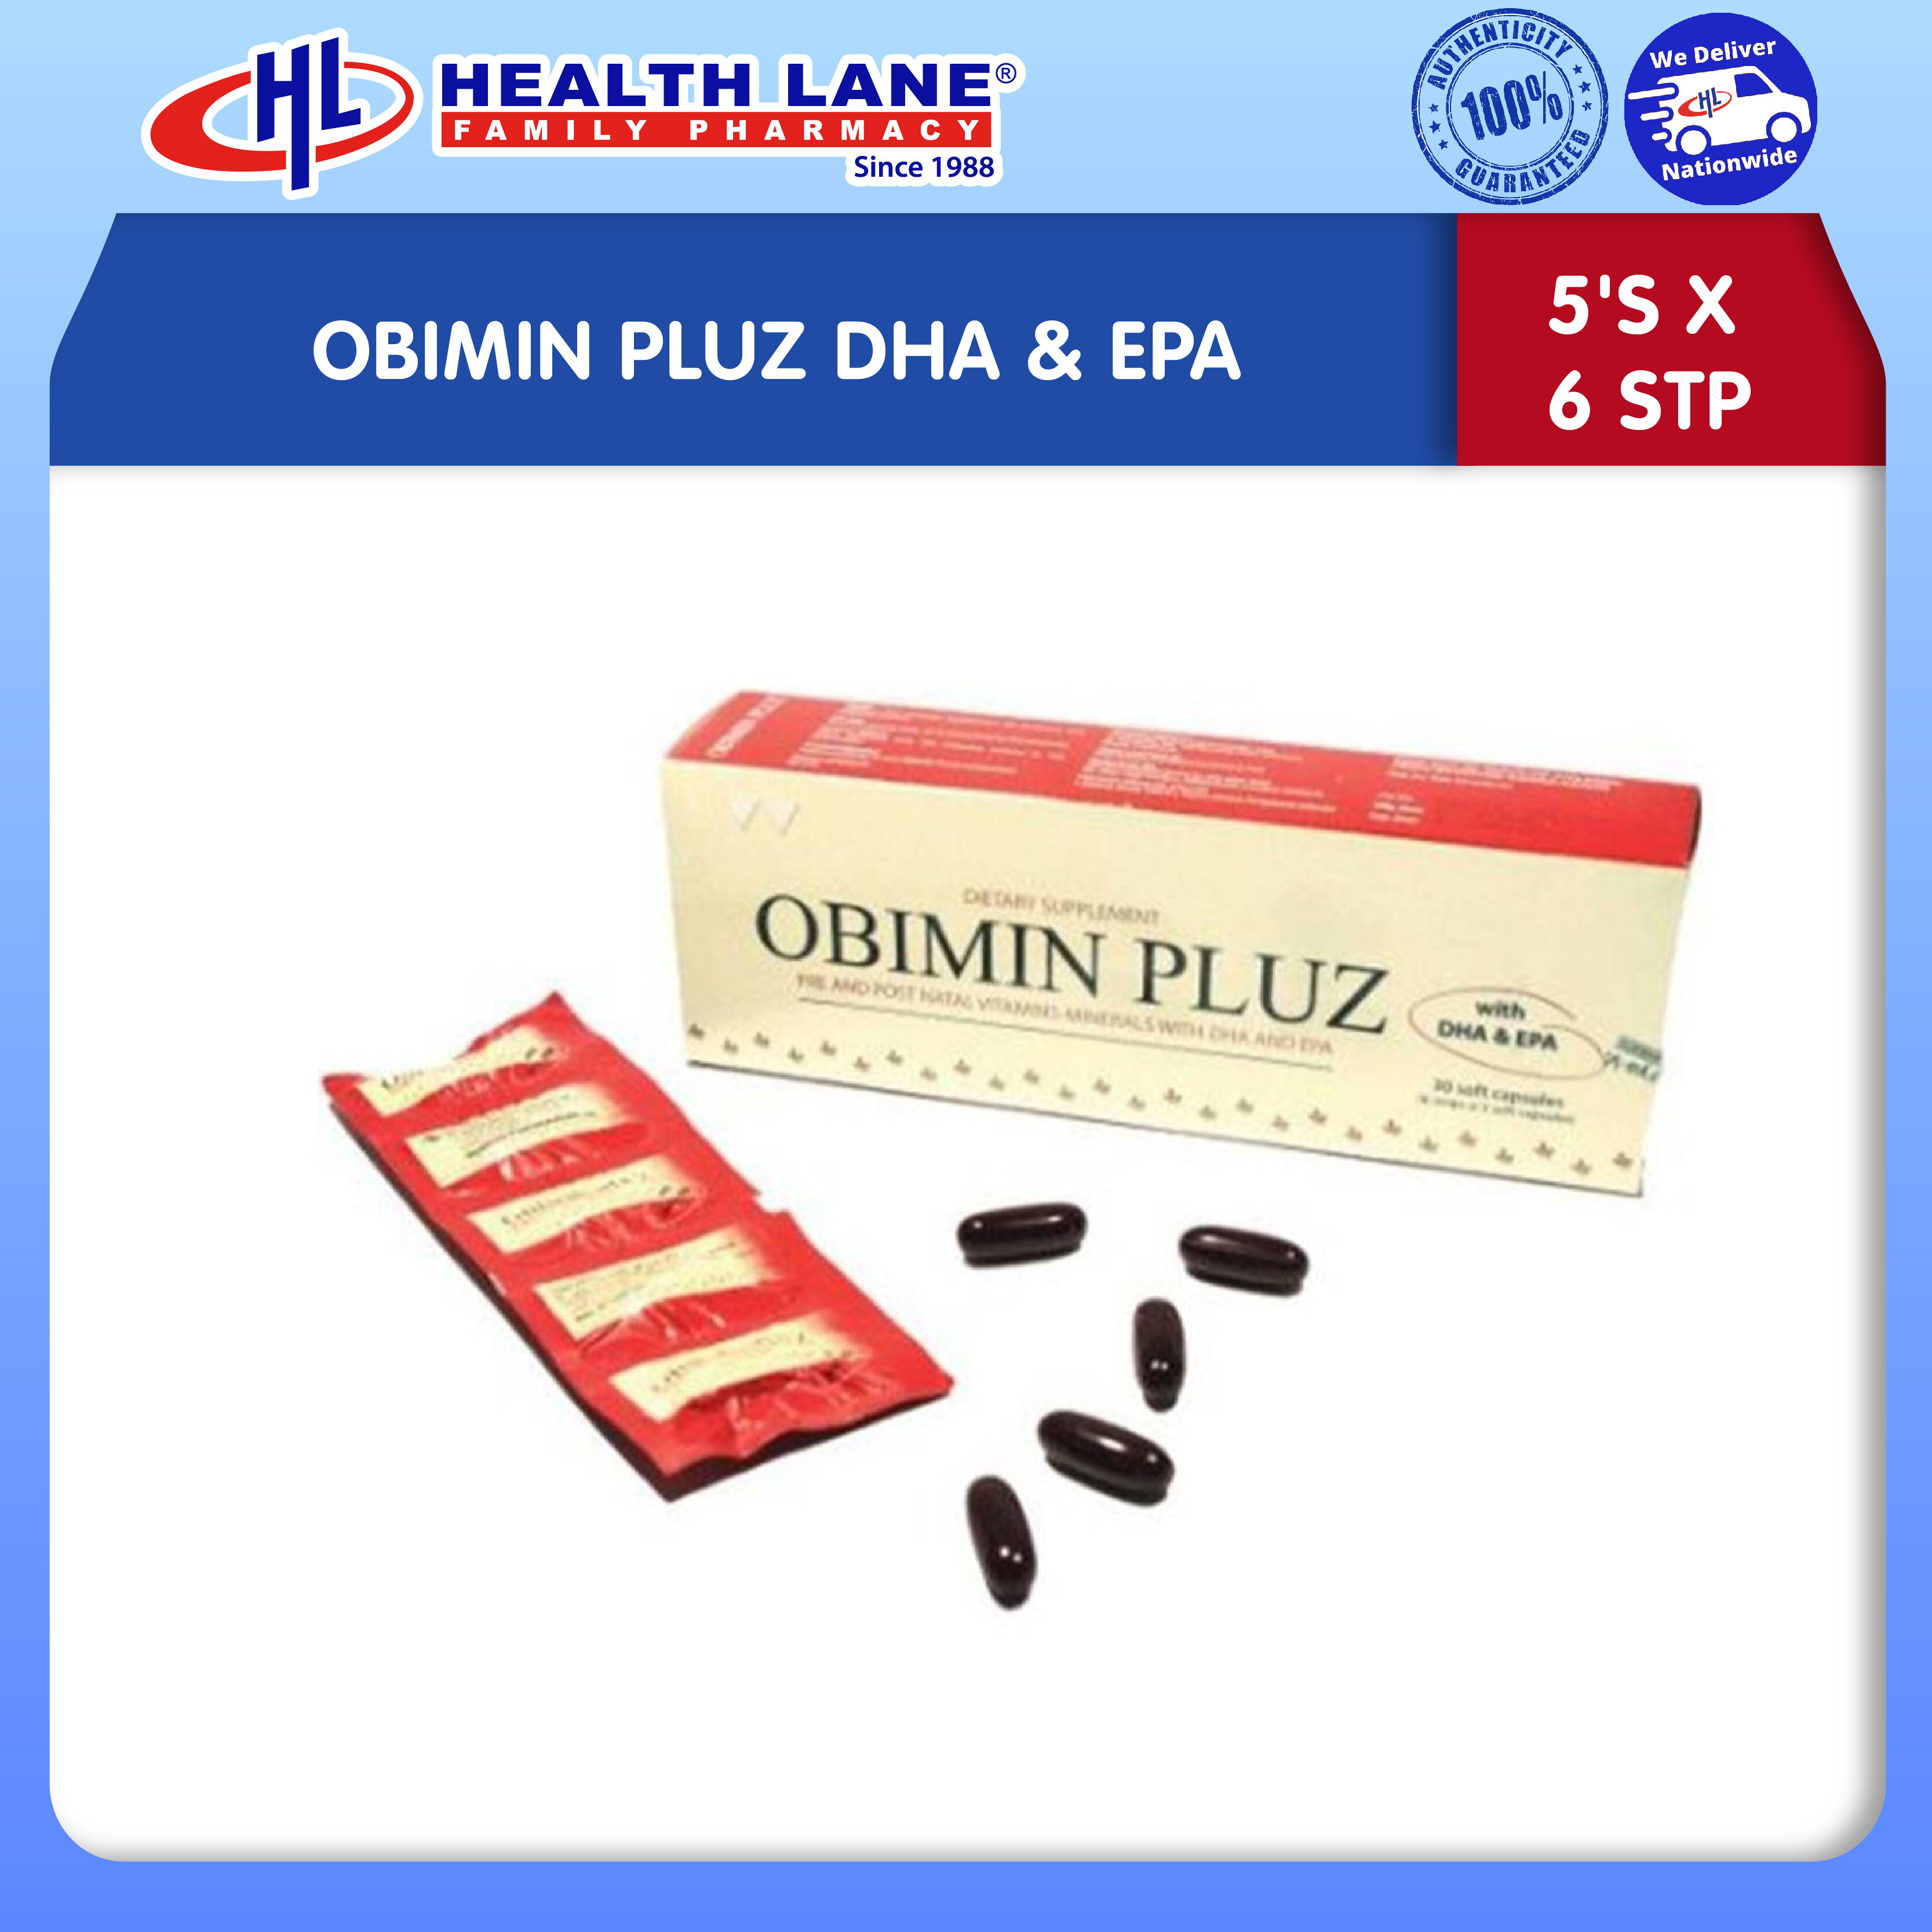 OBIMIN PLUZ DHA & EPA (5'Sx6 STP)